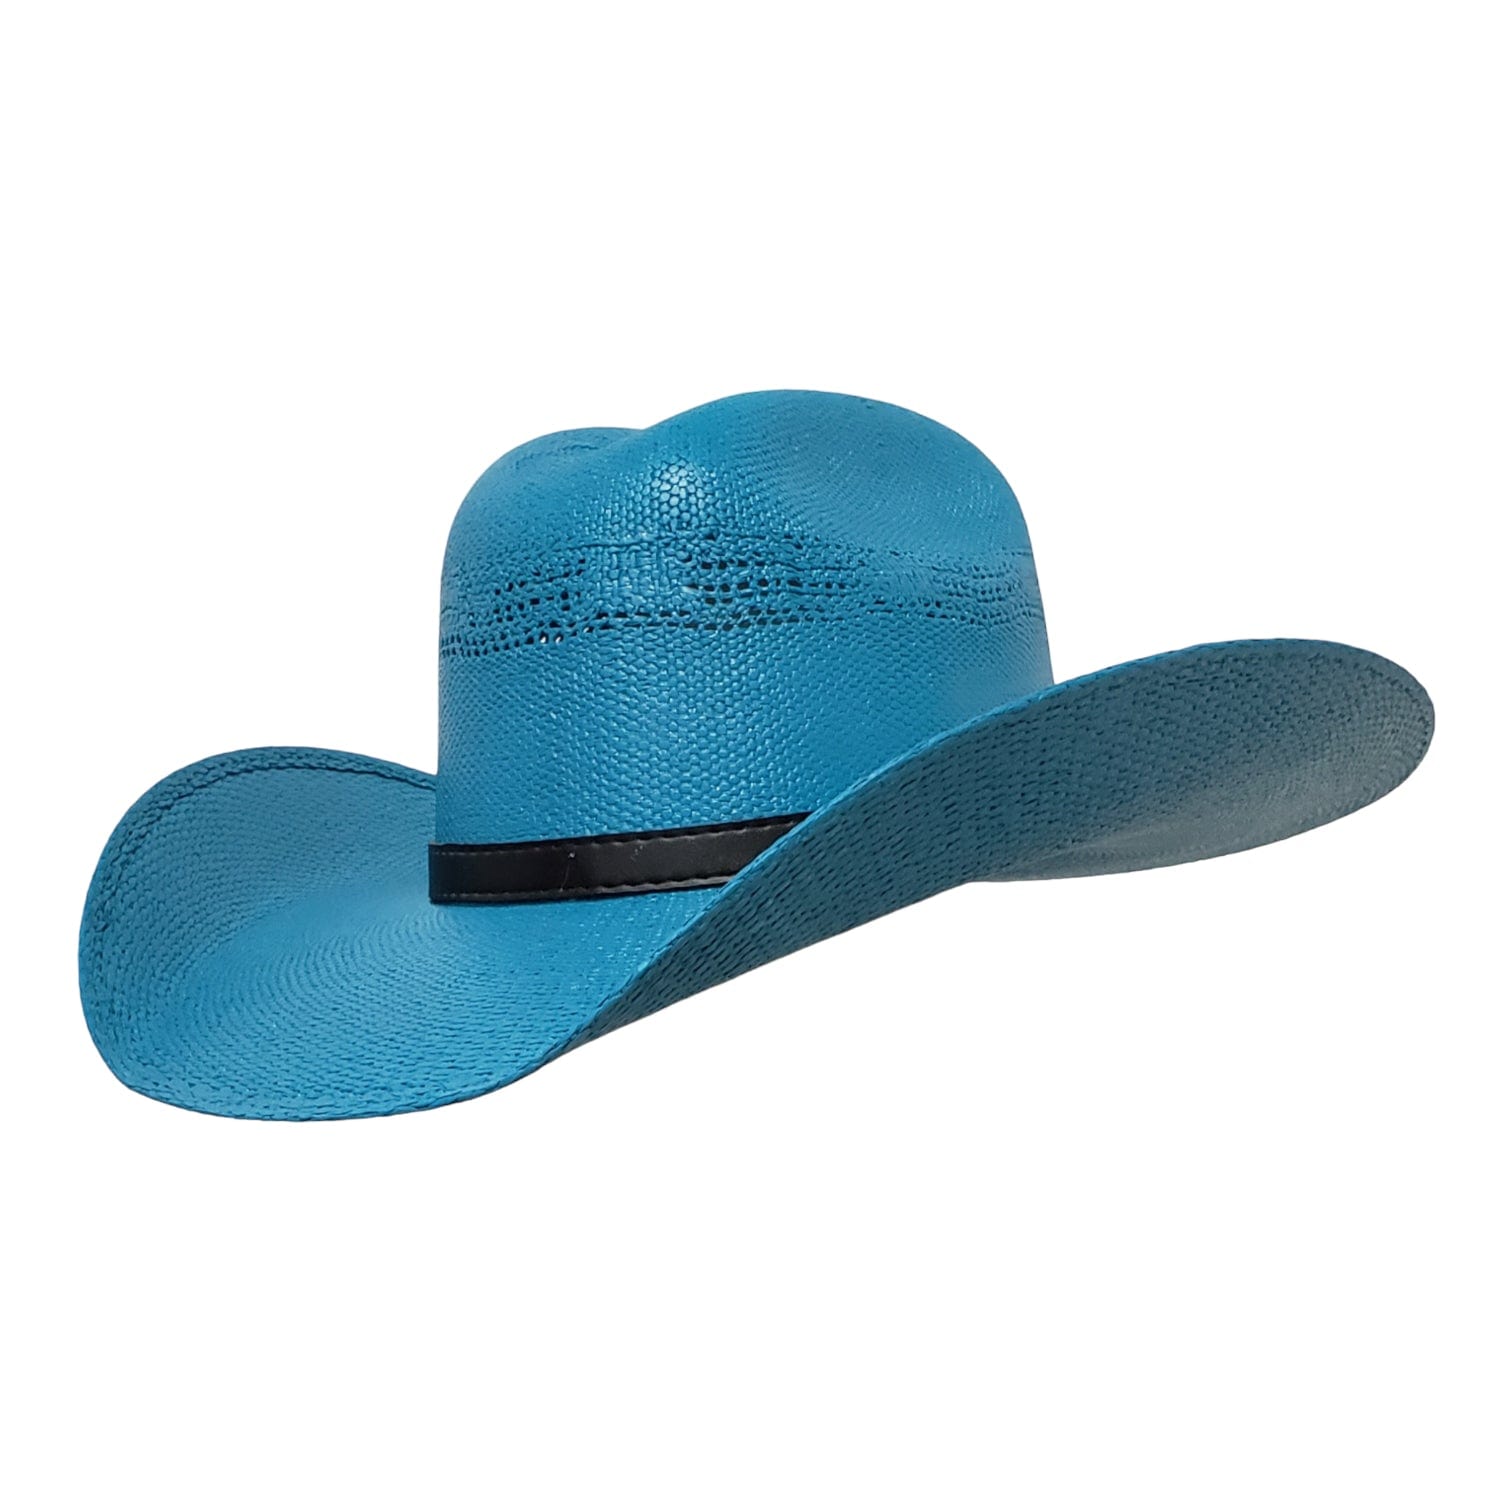 Gone Country Hats Rio Turquoise - Straw Bangora